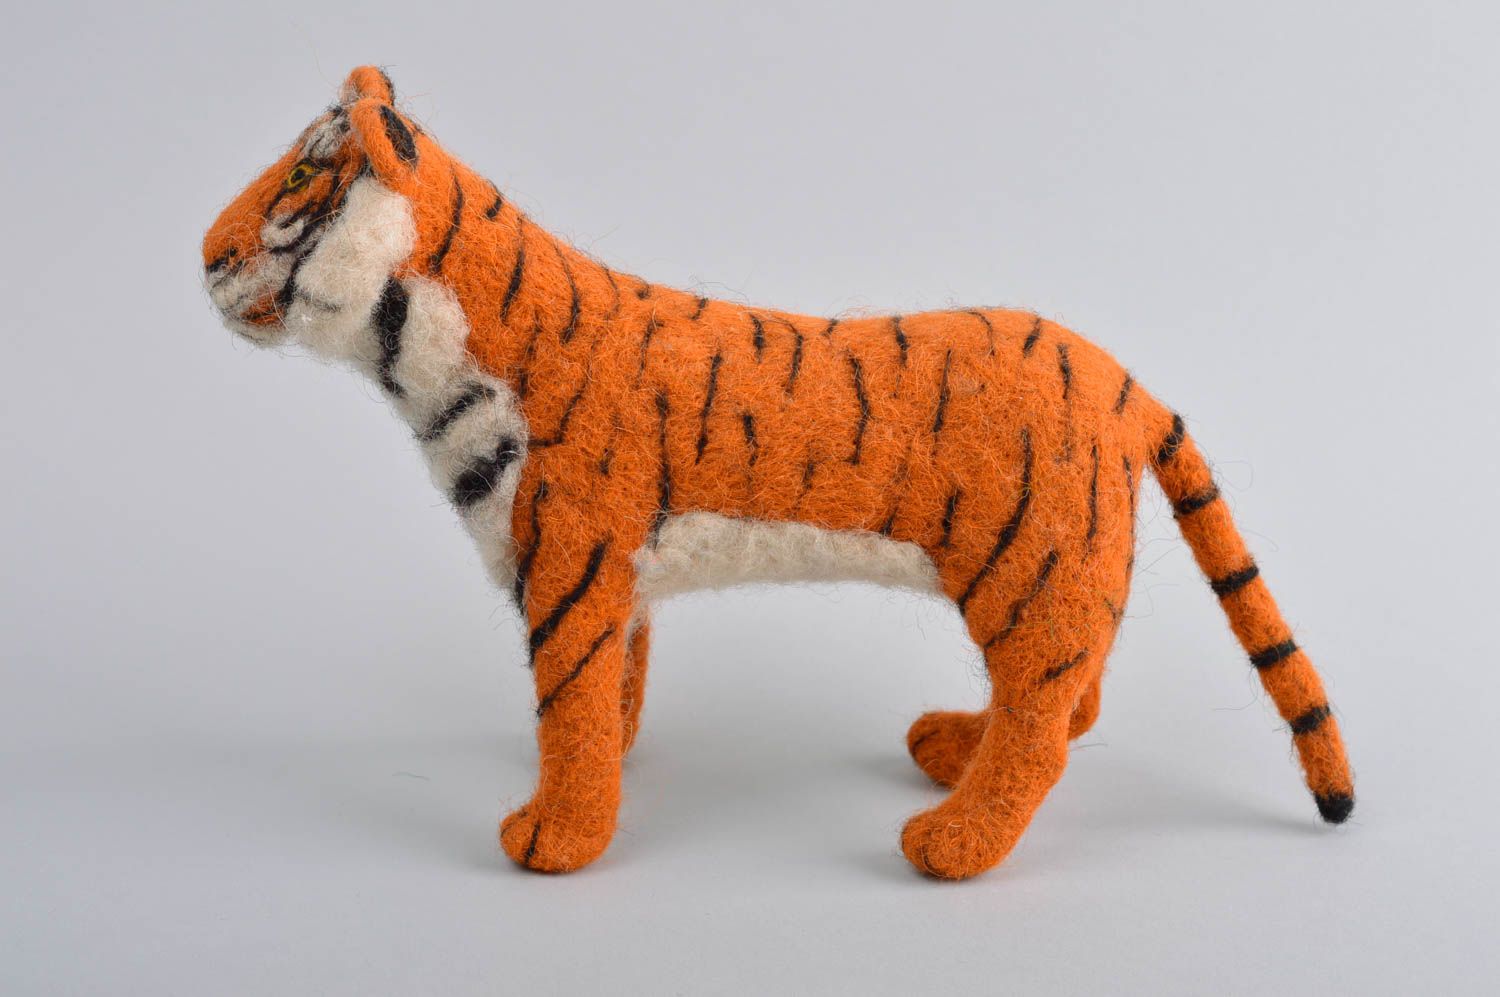 Handmade toy designer toy woolen animal toy for kids nursery decor gift ideas photo 3